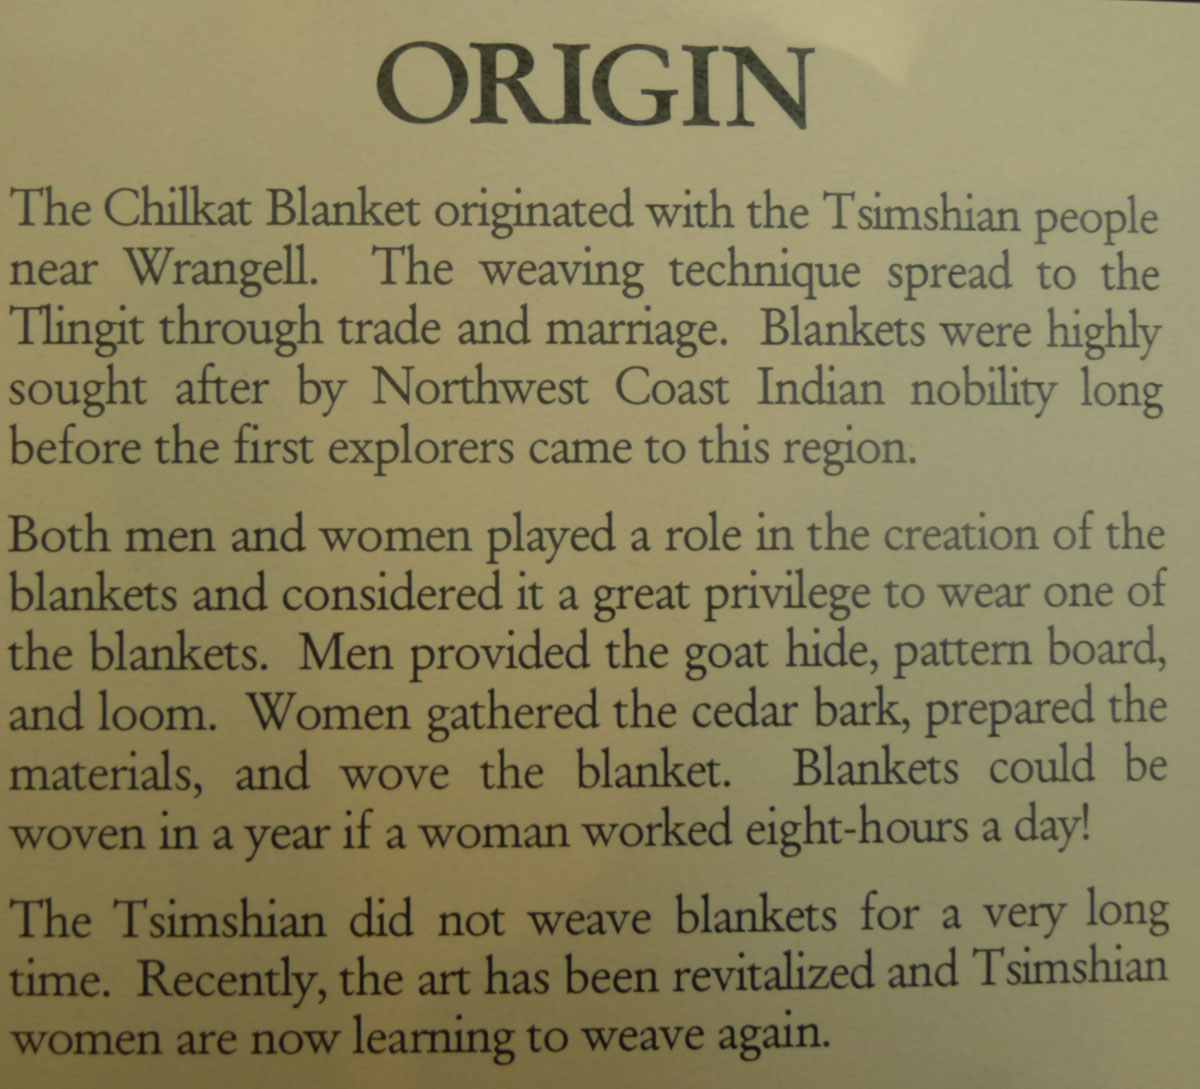 Chilkat weaving origins according to